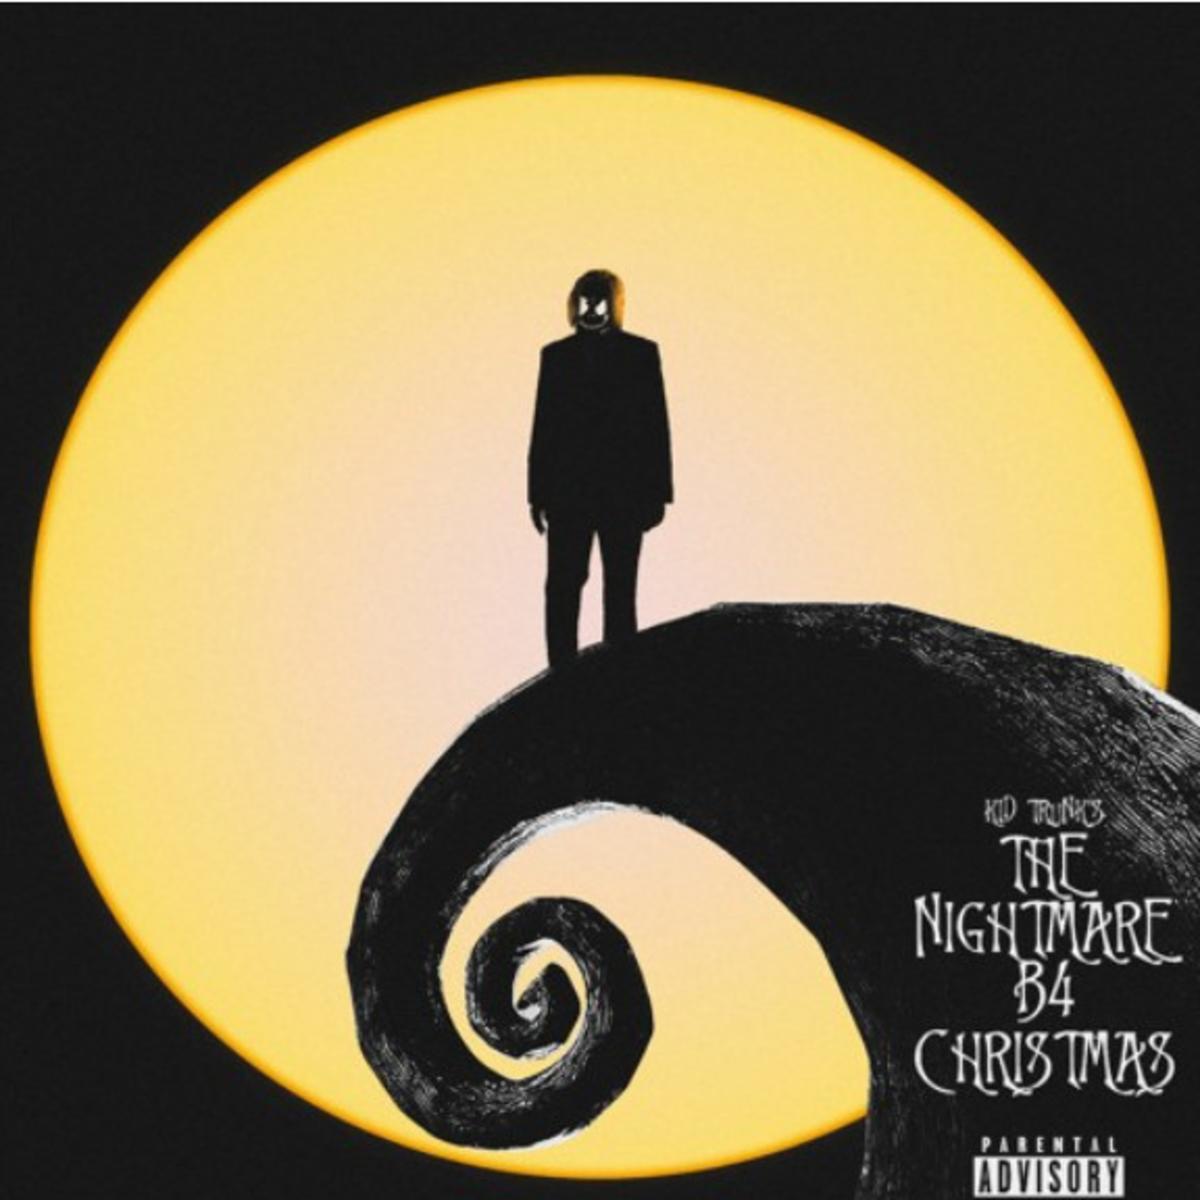 Listen To “The Nightmare B4 Christmas” By KiD TRUNKS Featuring Lil Uzi Vert & JackBoy